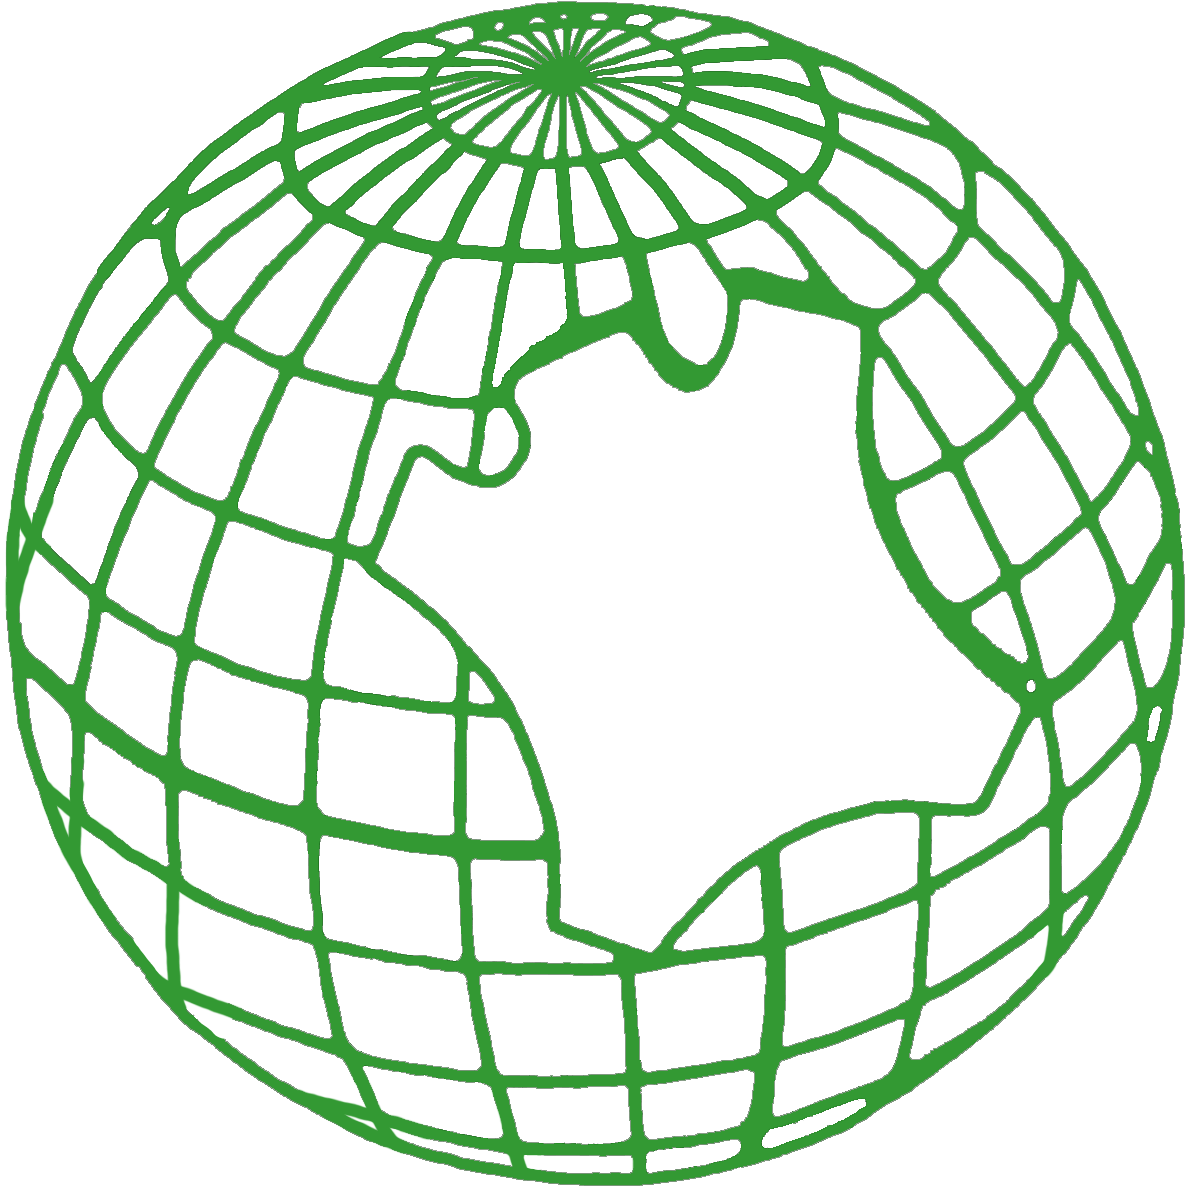 Primary Logo (Vector)